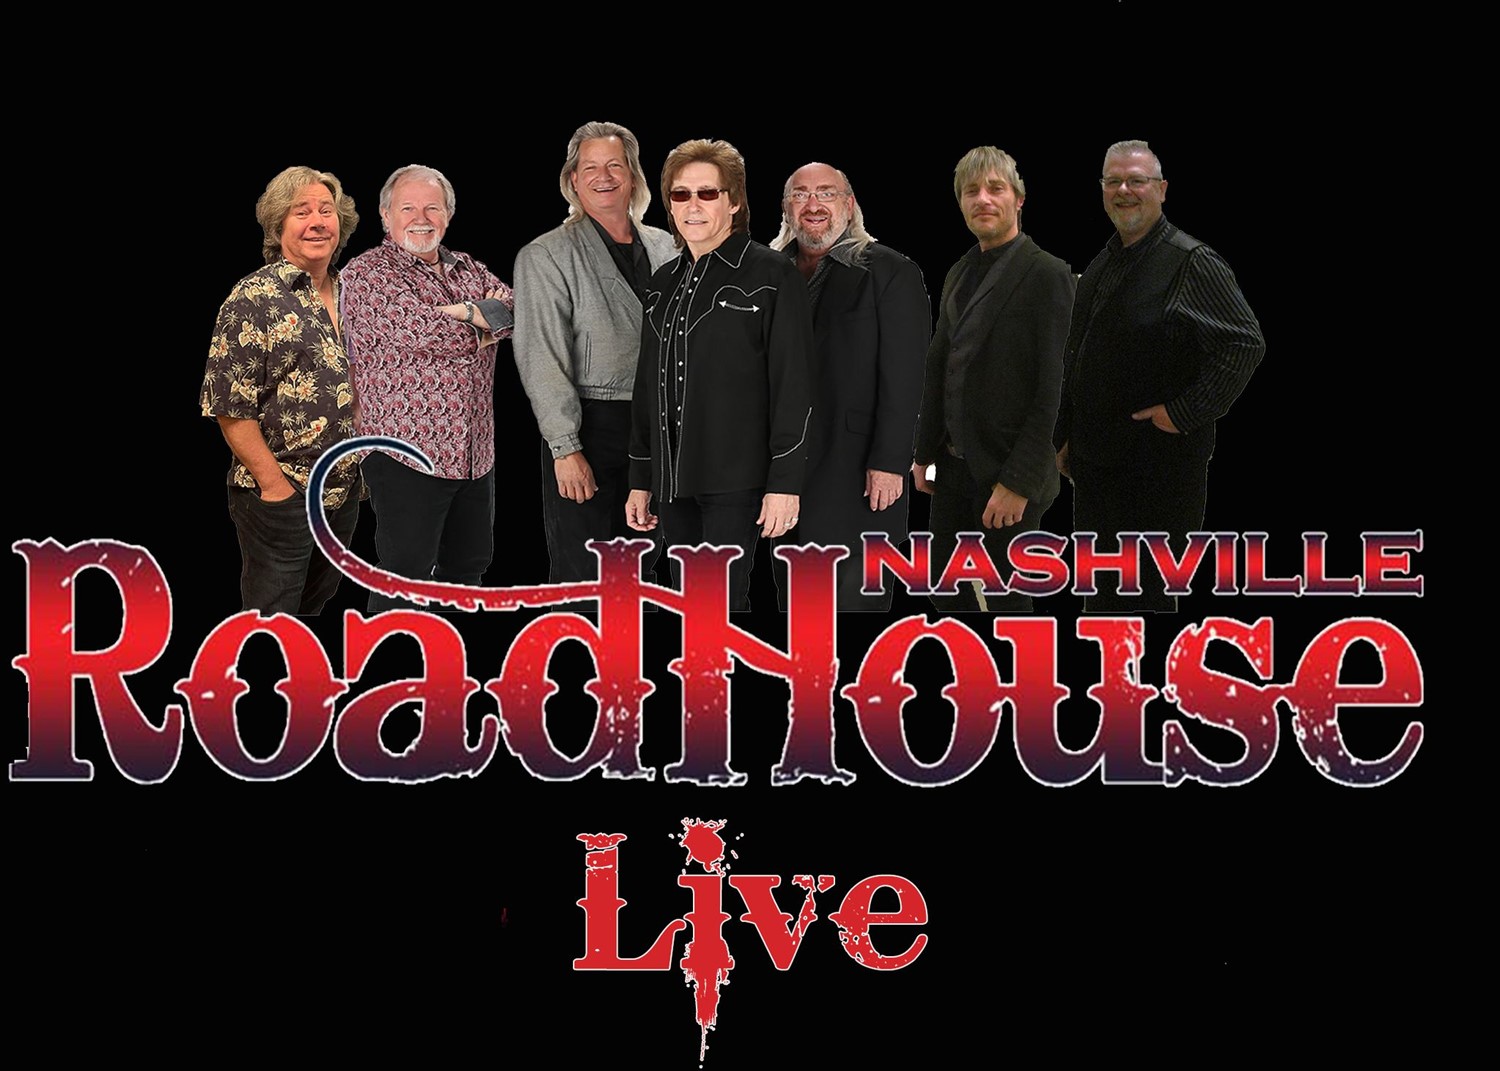 Nashville Roadhouse Live  on dic. 18, 00:00@Nashville Roadhouse Theater at The Branson Star - Elegir asientoCompra entradas y obtén información ennashvilleroadhouse.com bransonstartheater